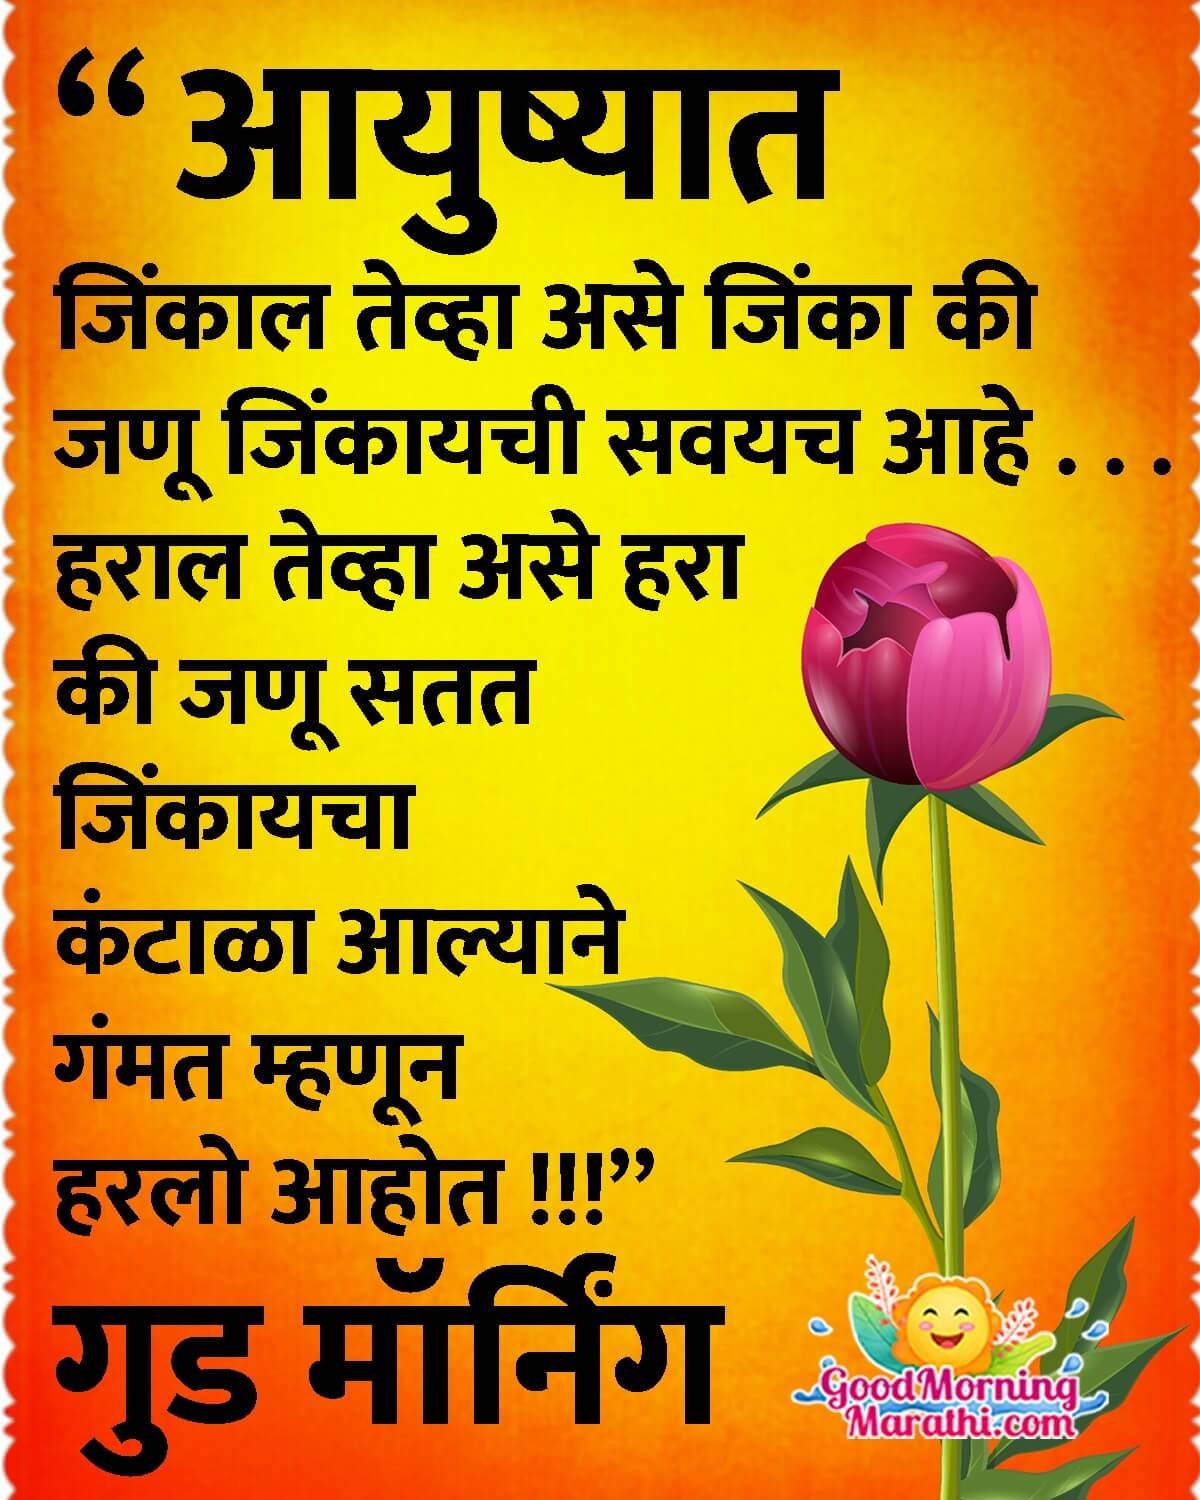 Good Morning Marathi Life Quote Pic